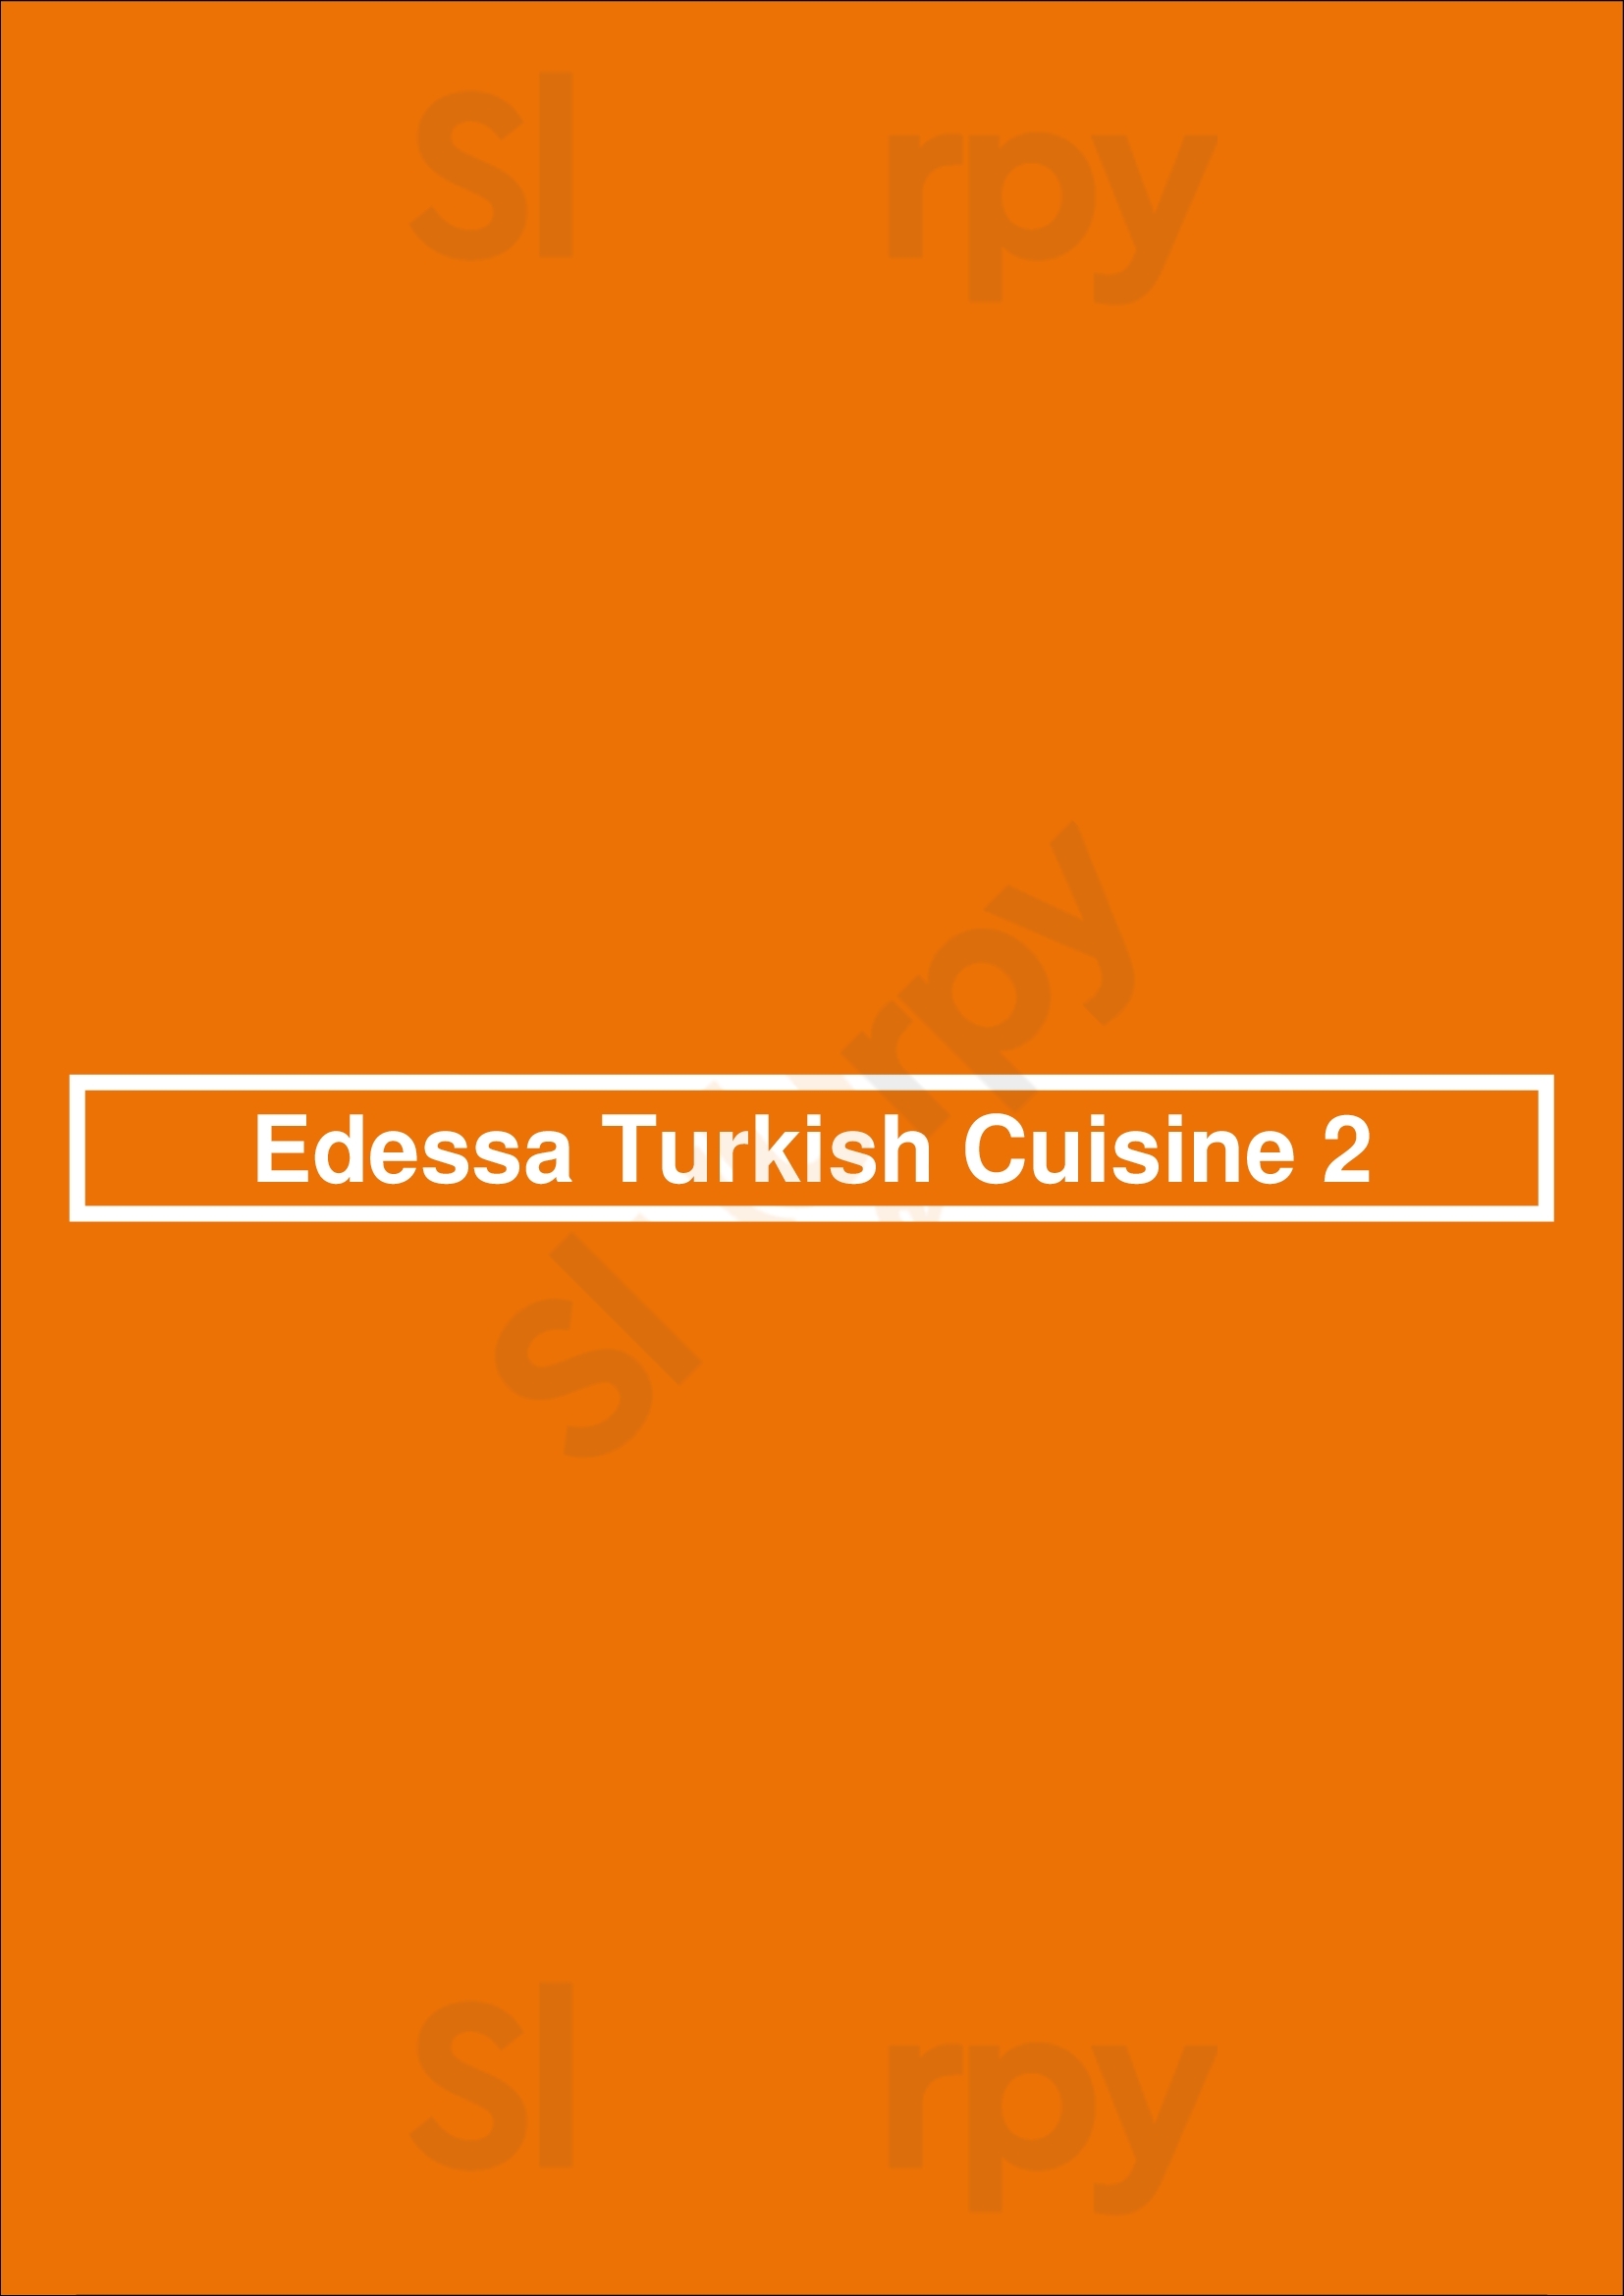 Edessa Turkish Cuisine 2 Margate Menu - 1